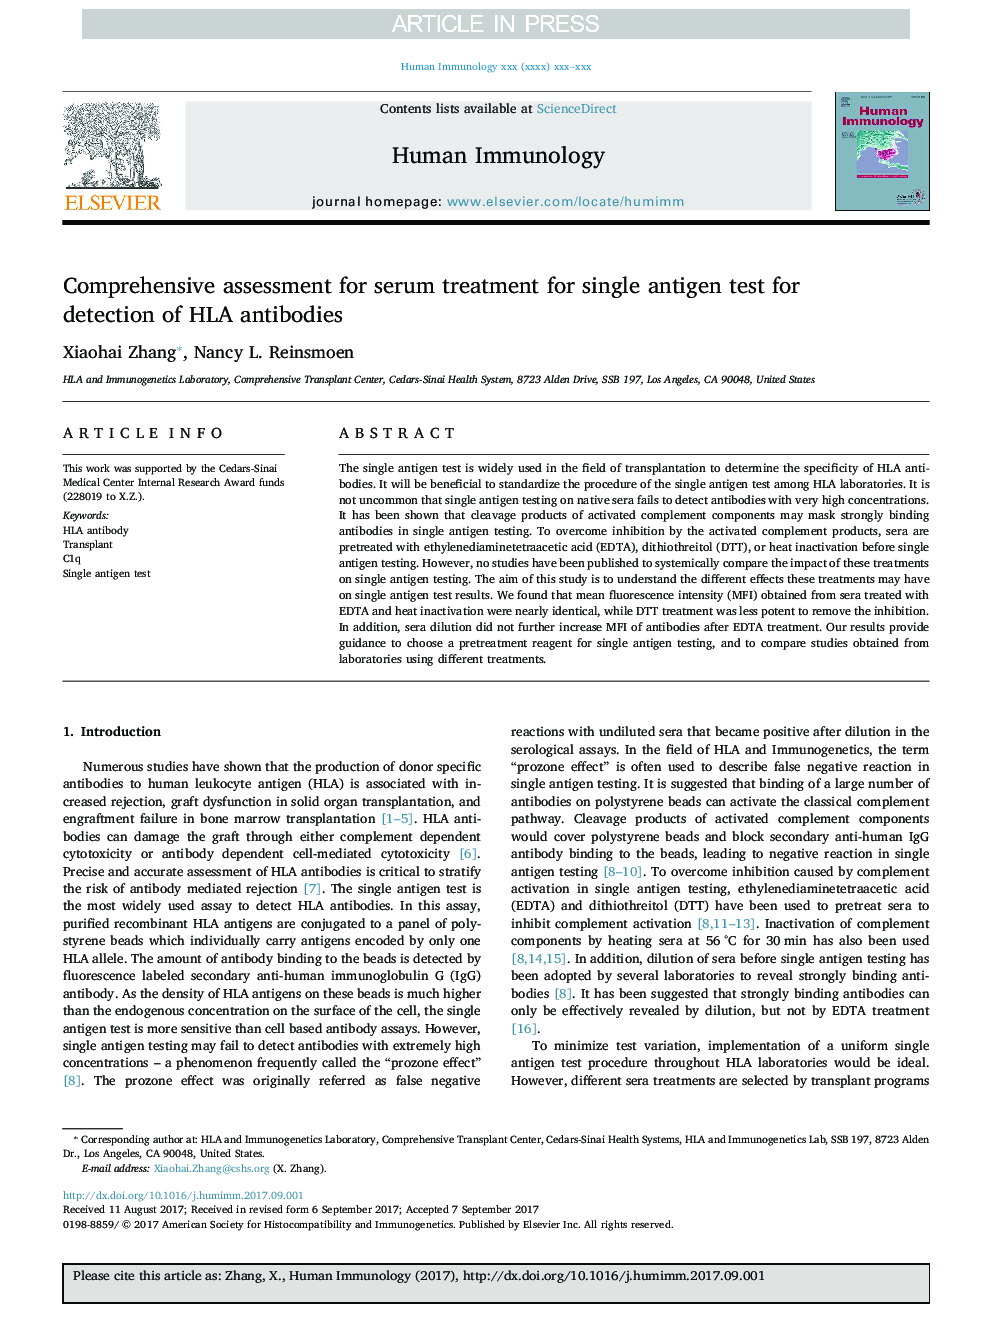 Comprehensive assessment for serum treatment for single antigen test for detection of HLA antibodies